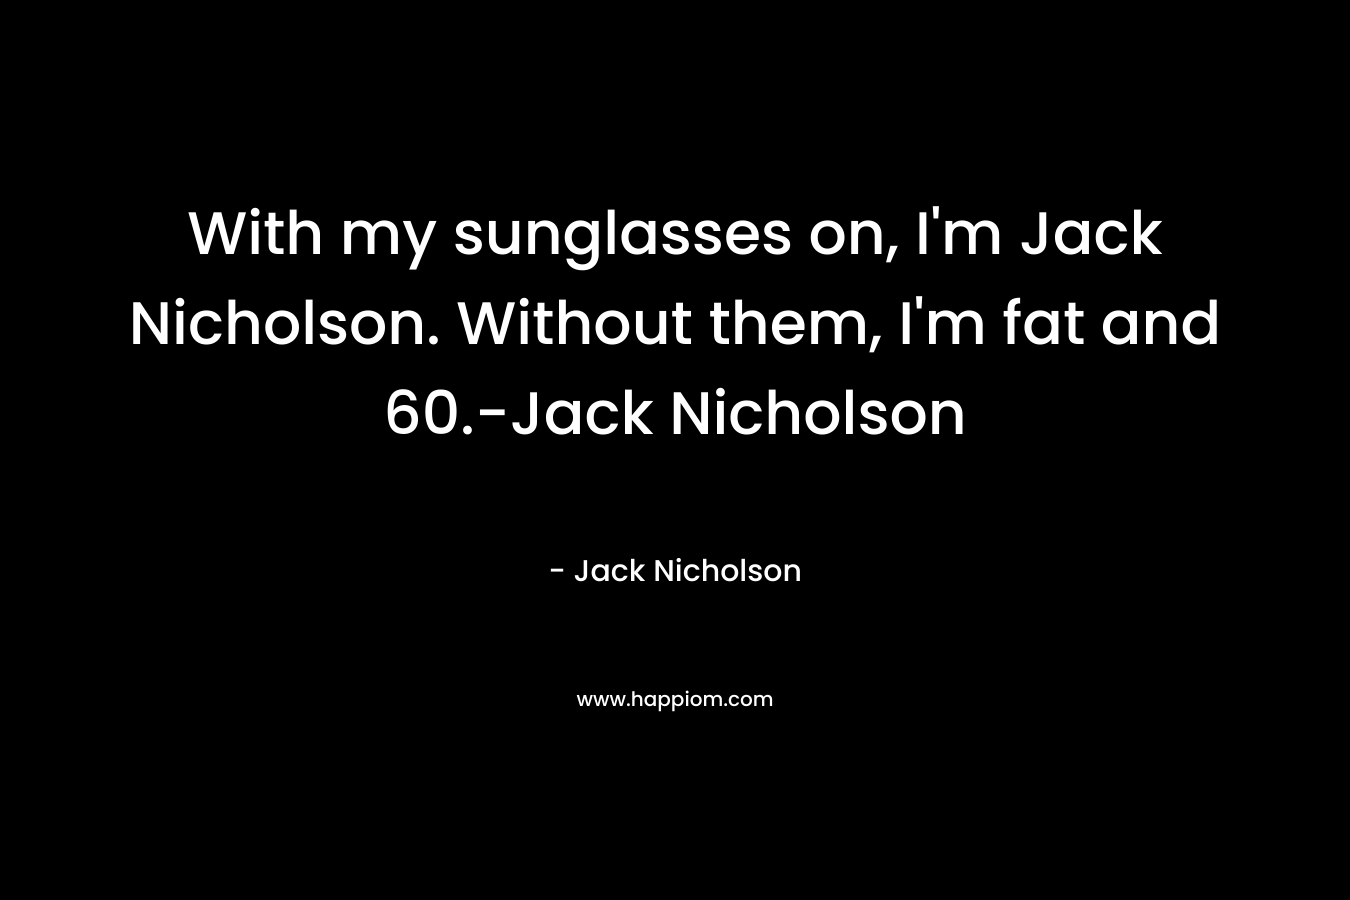 With my sunglasses on, I'm Jack Nicholson. Without them, I'm fat and 60.-Jack Nicholson